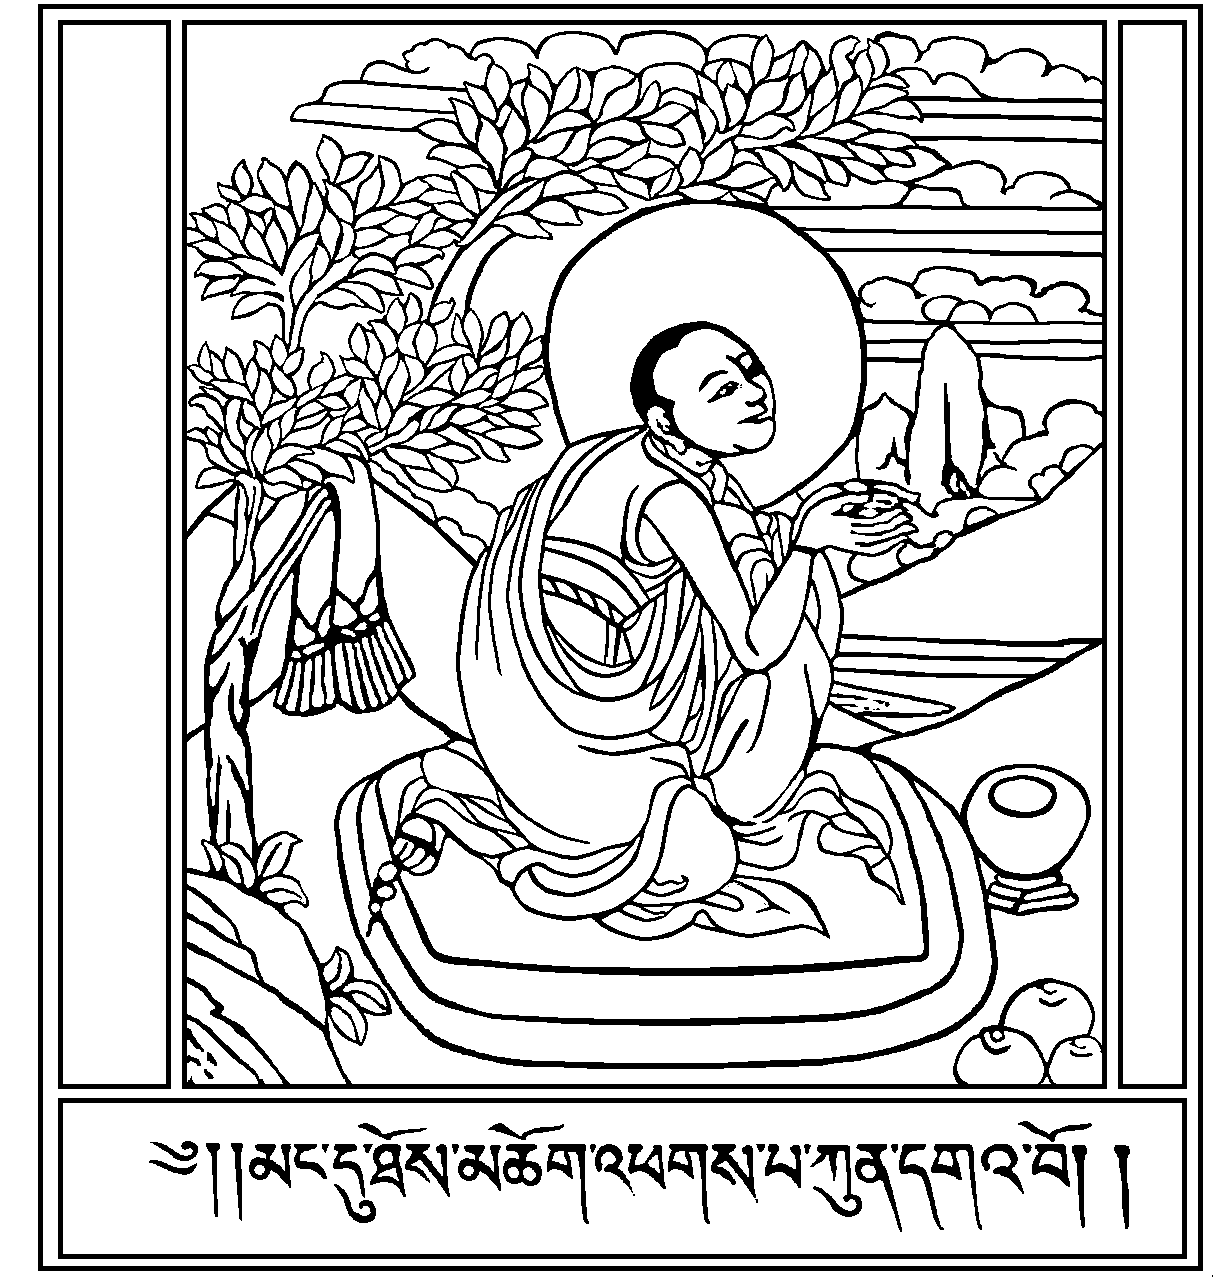 Old illustration of a Tibetan monk